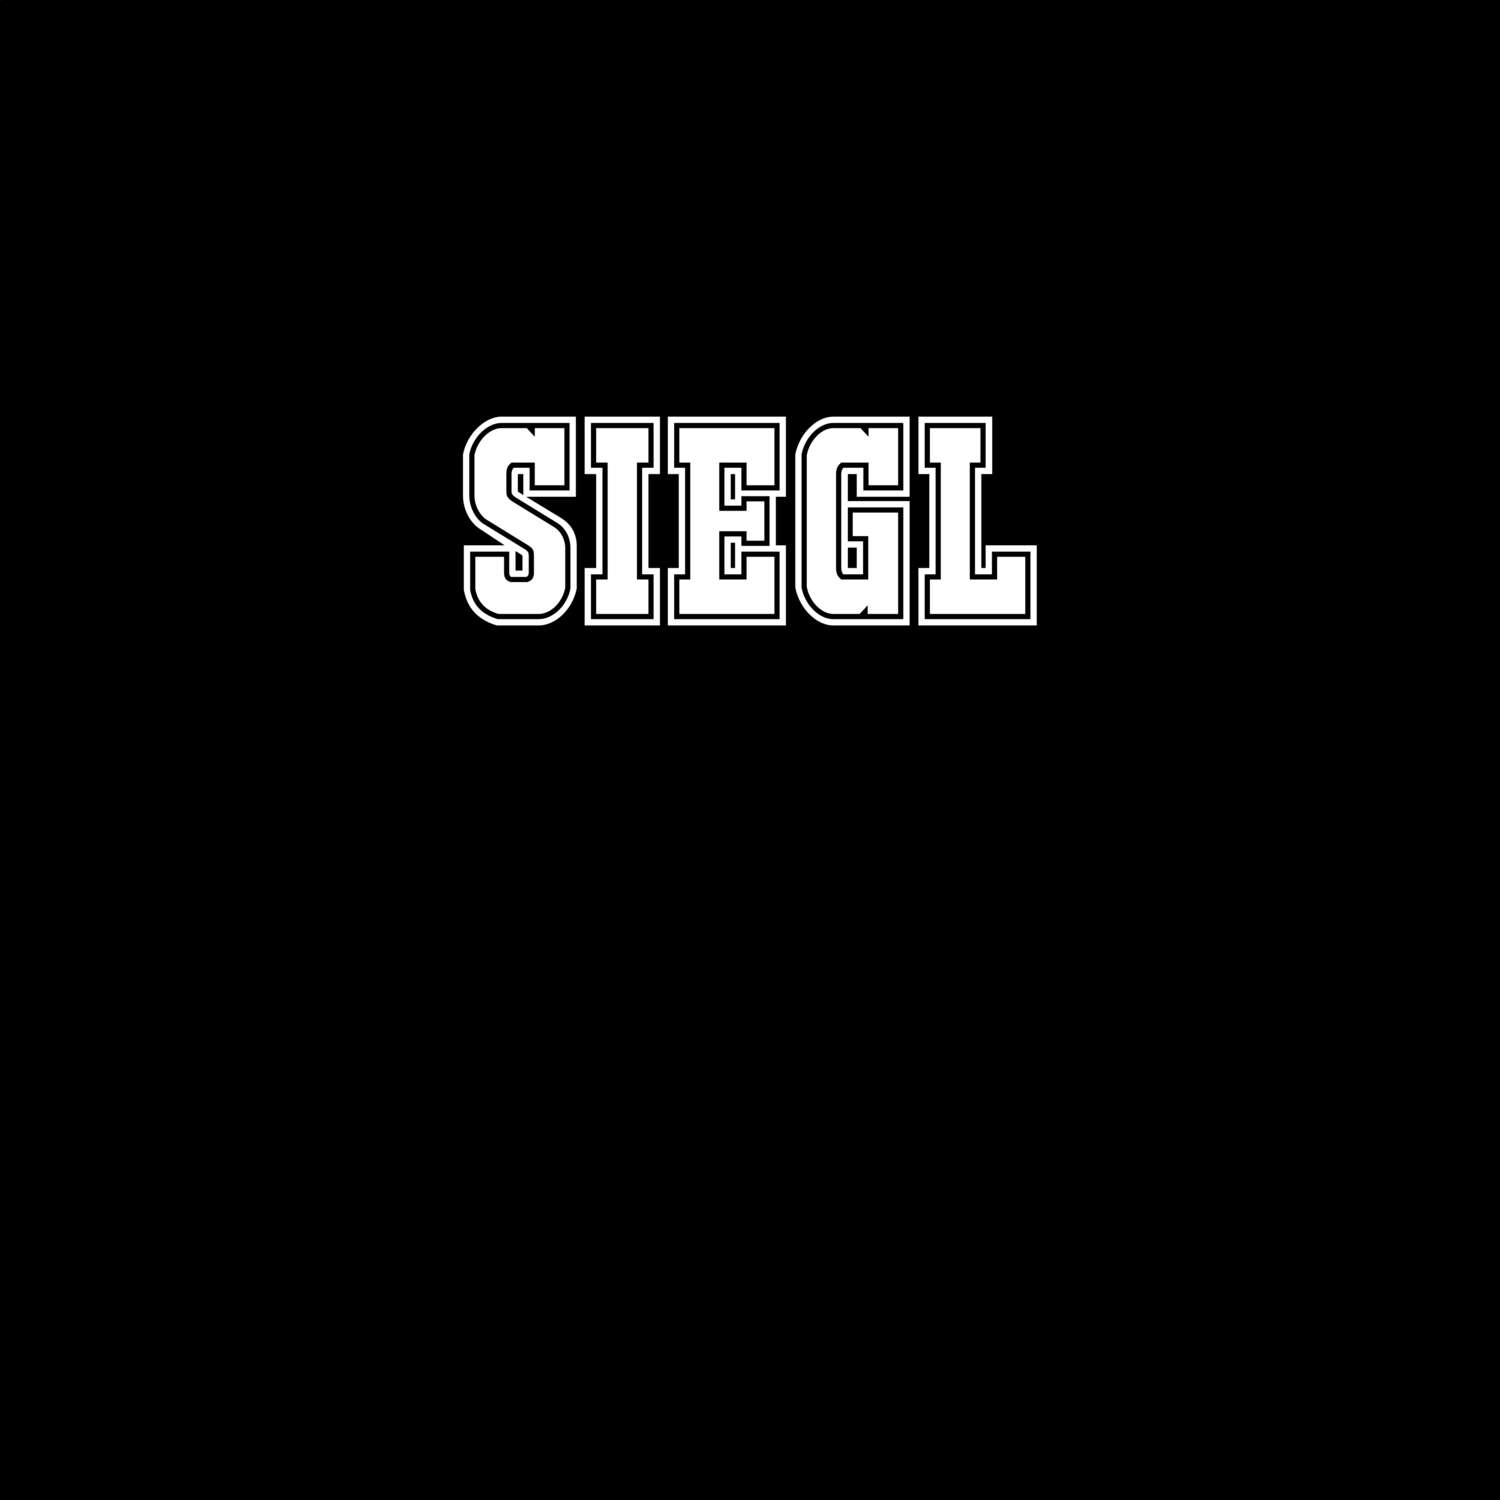 Siegl T-Shirt »Classic«